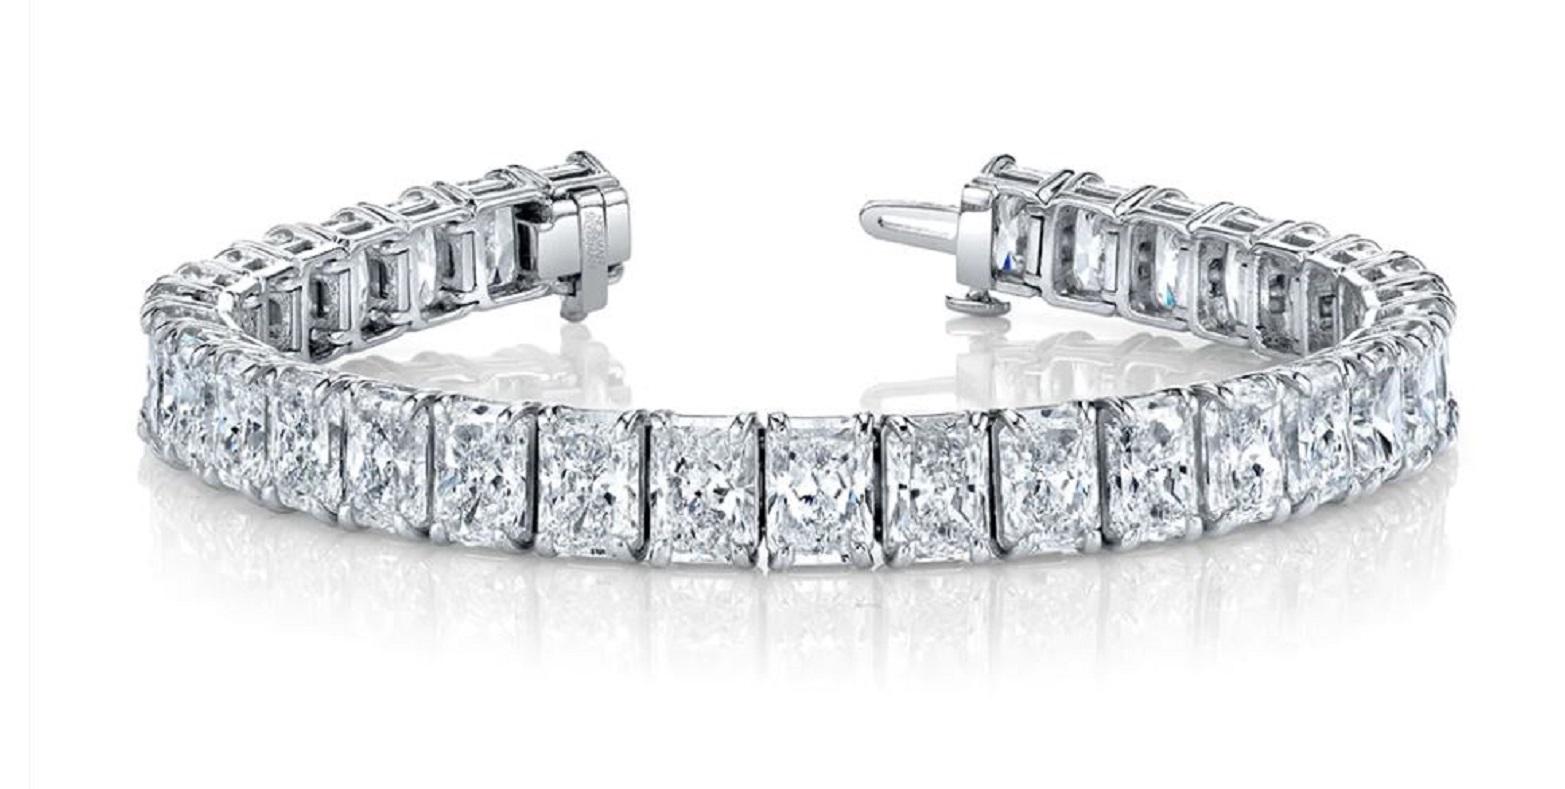 Platinum 4 prong diamond bracelet  32.59 cts GIA certified radiant cut diamonds I-J color, VS-SI clarity, 32 stones-each diamond over 1 carat.Excellent cut.